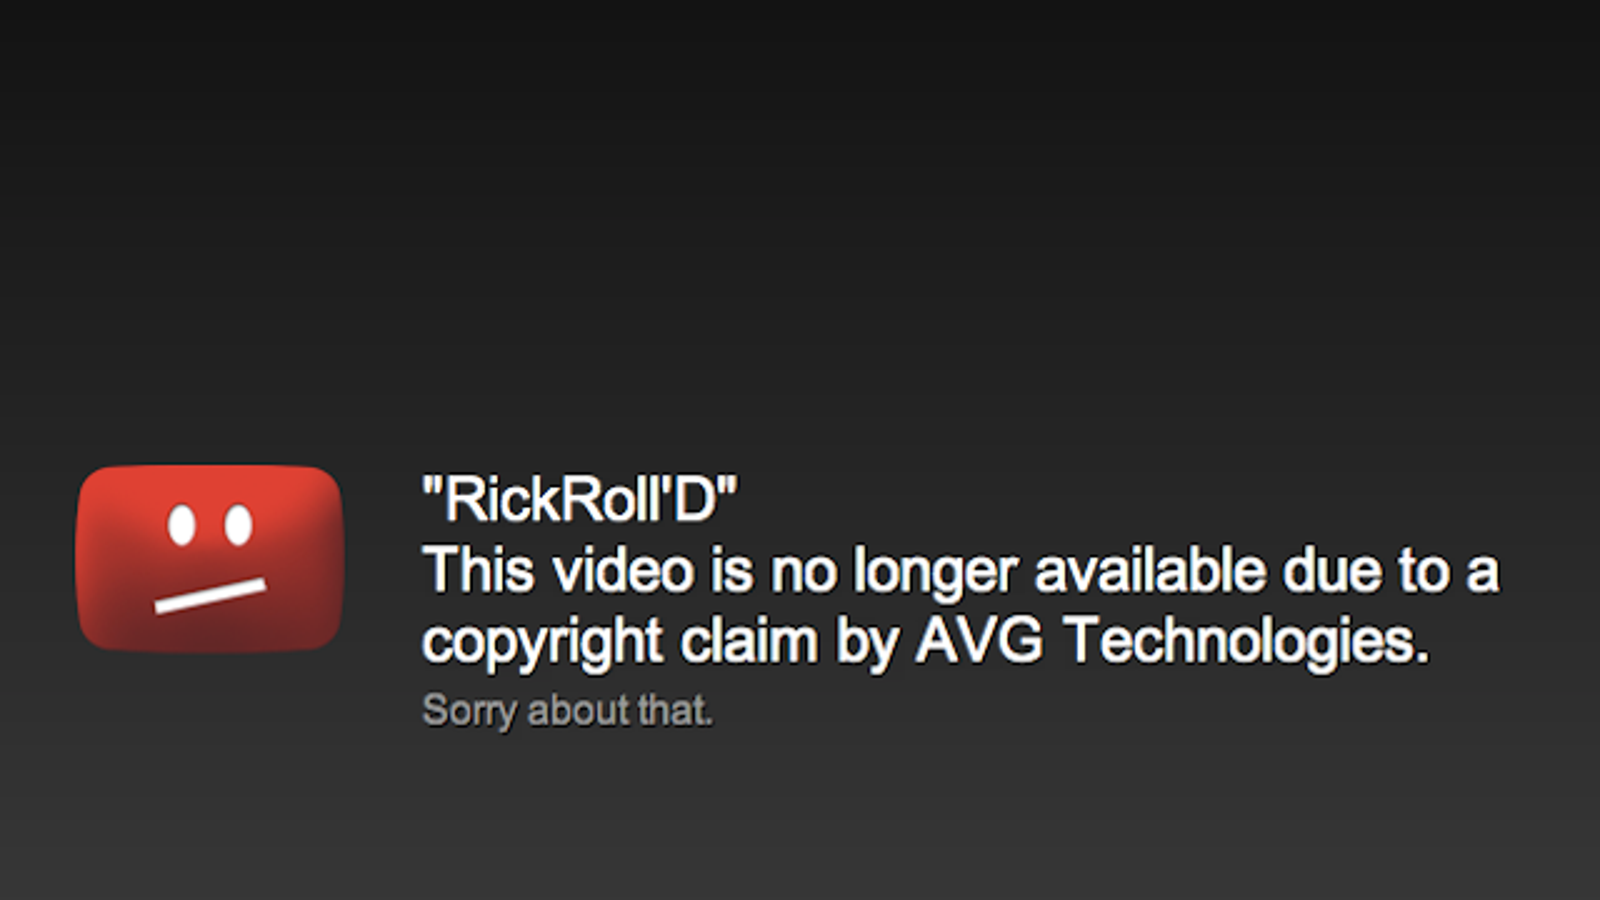 The Original RickRoll'd YouTube Video Has Been Taken Down